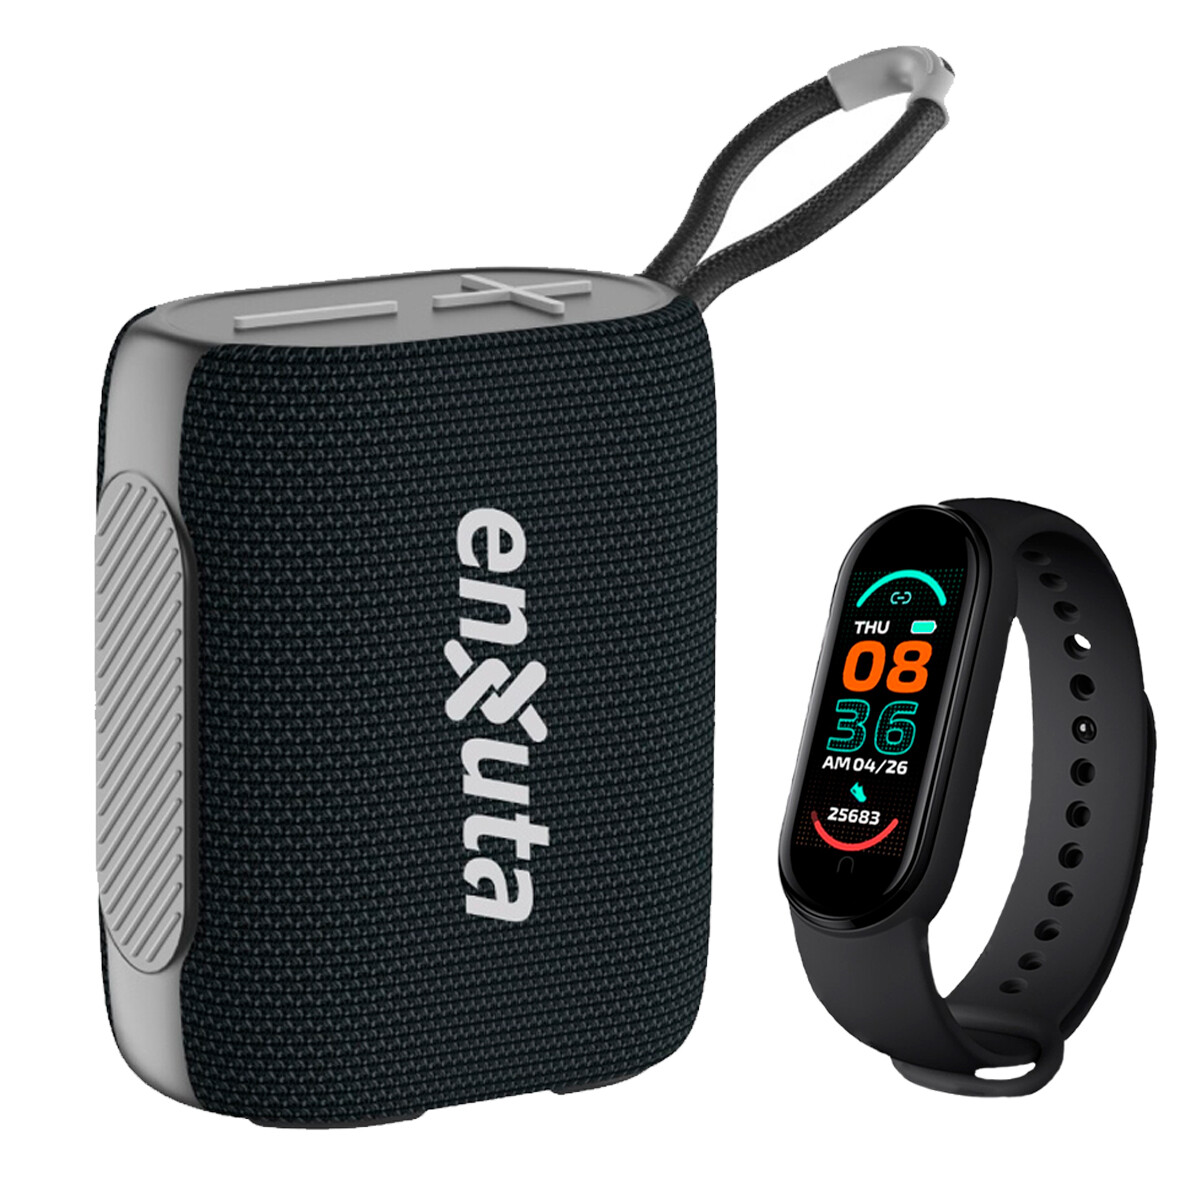 Parlante Portátil Enxuta Apenx295 Bluetooth + Smartwatch 